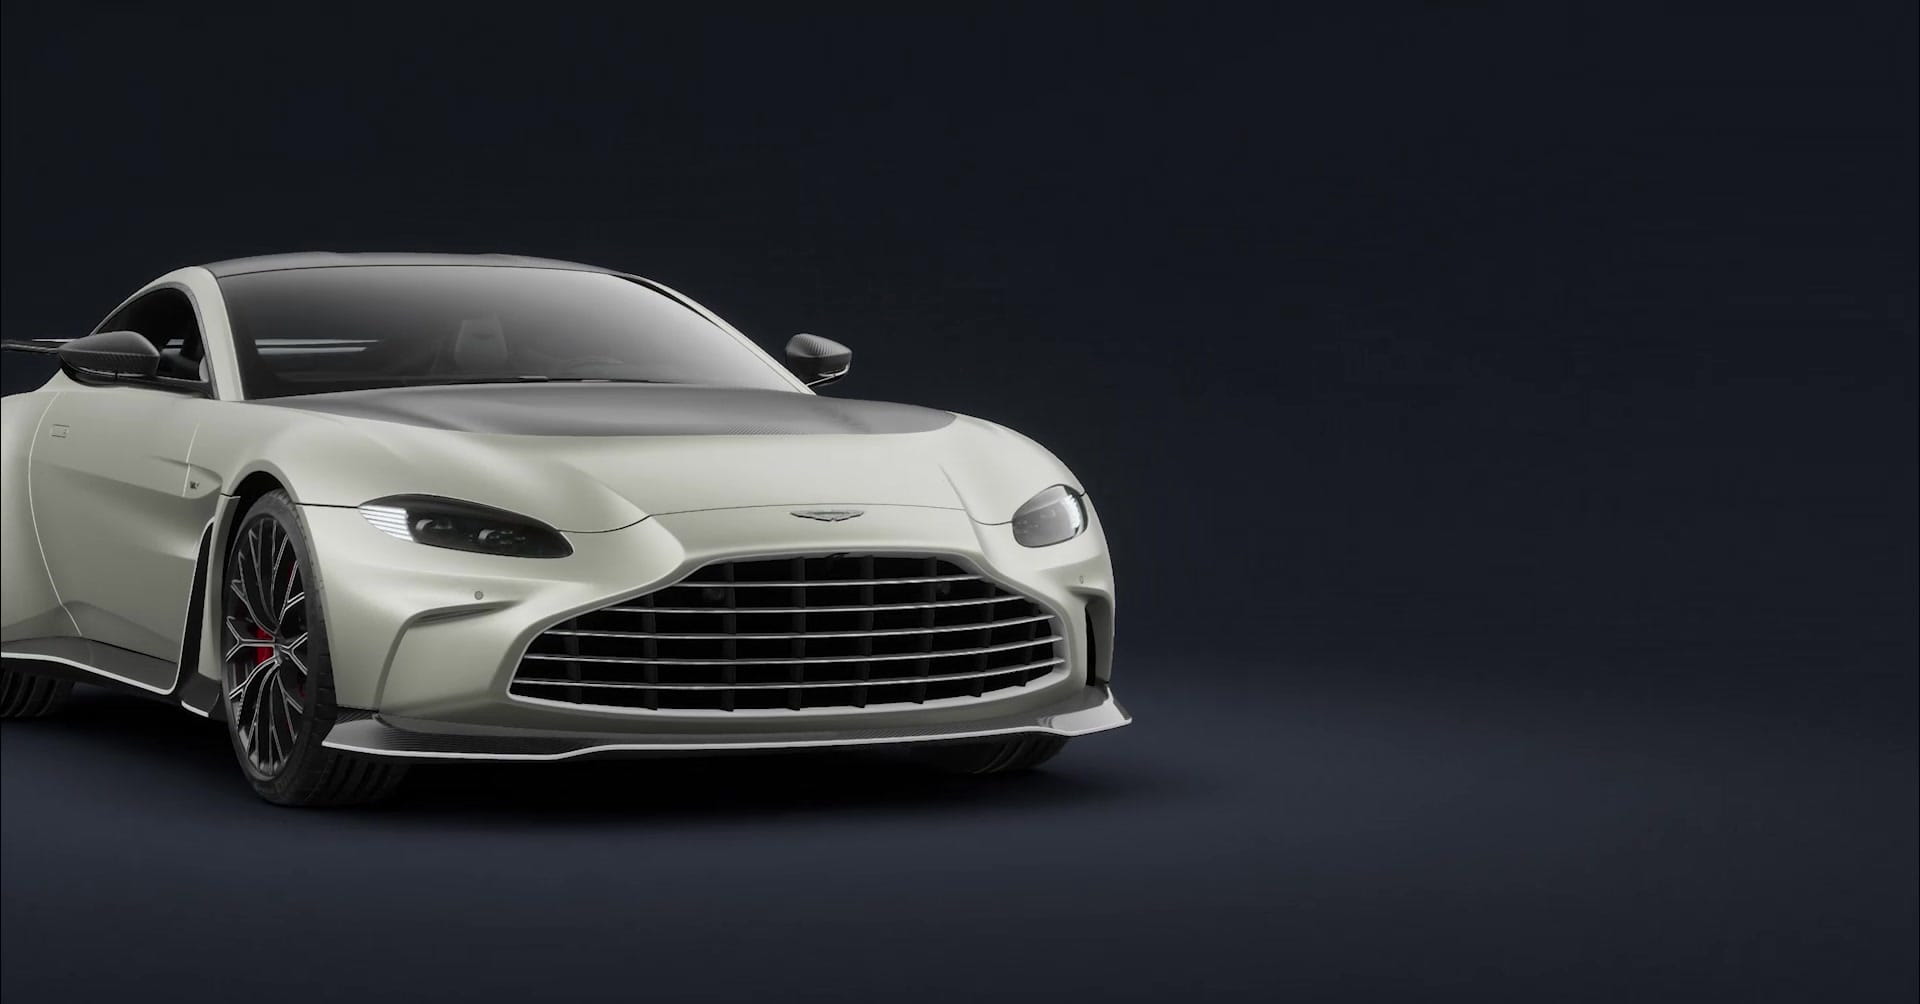 V12 Vantage | Aston Martin | Aston Martin